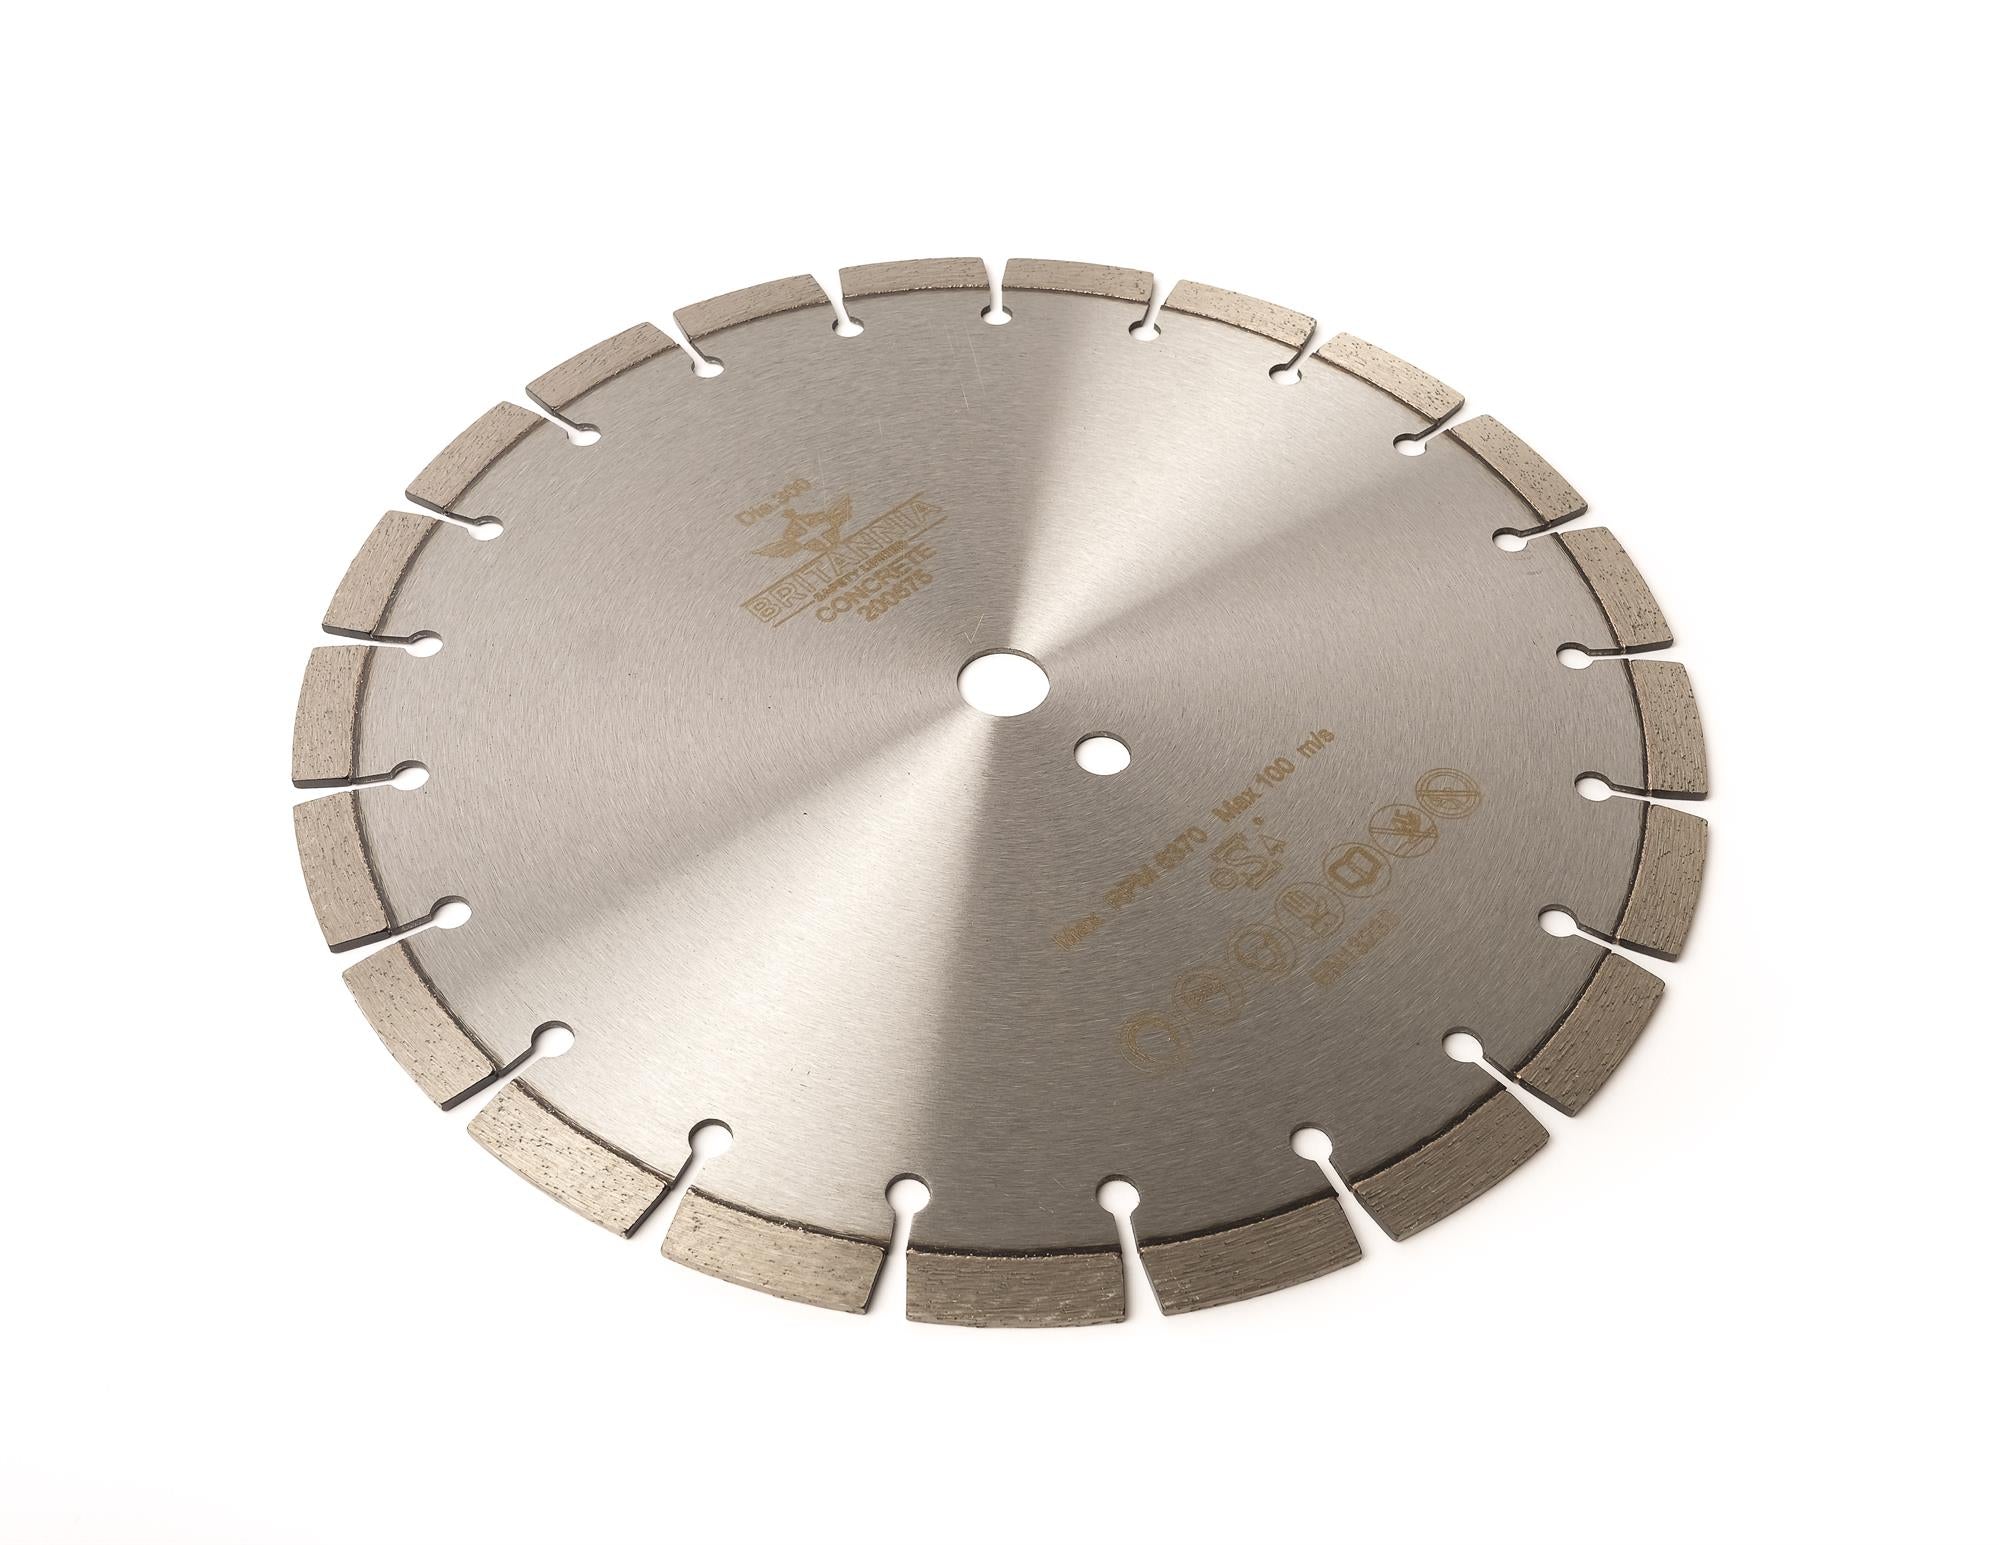 Wet/dry disc saw blade with 12mm premium professional laser weld diamond segments